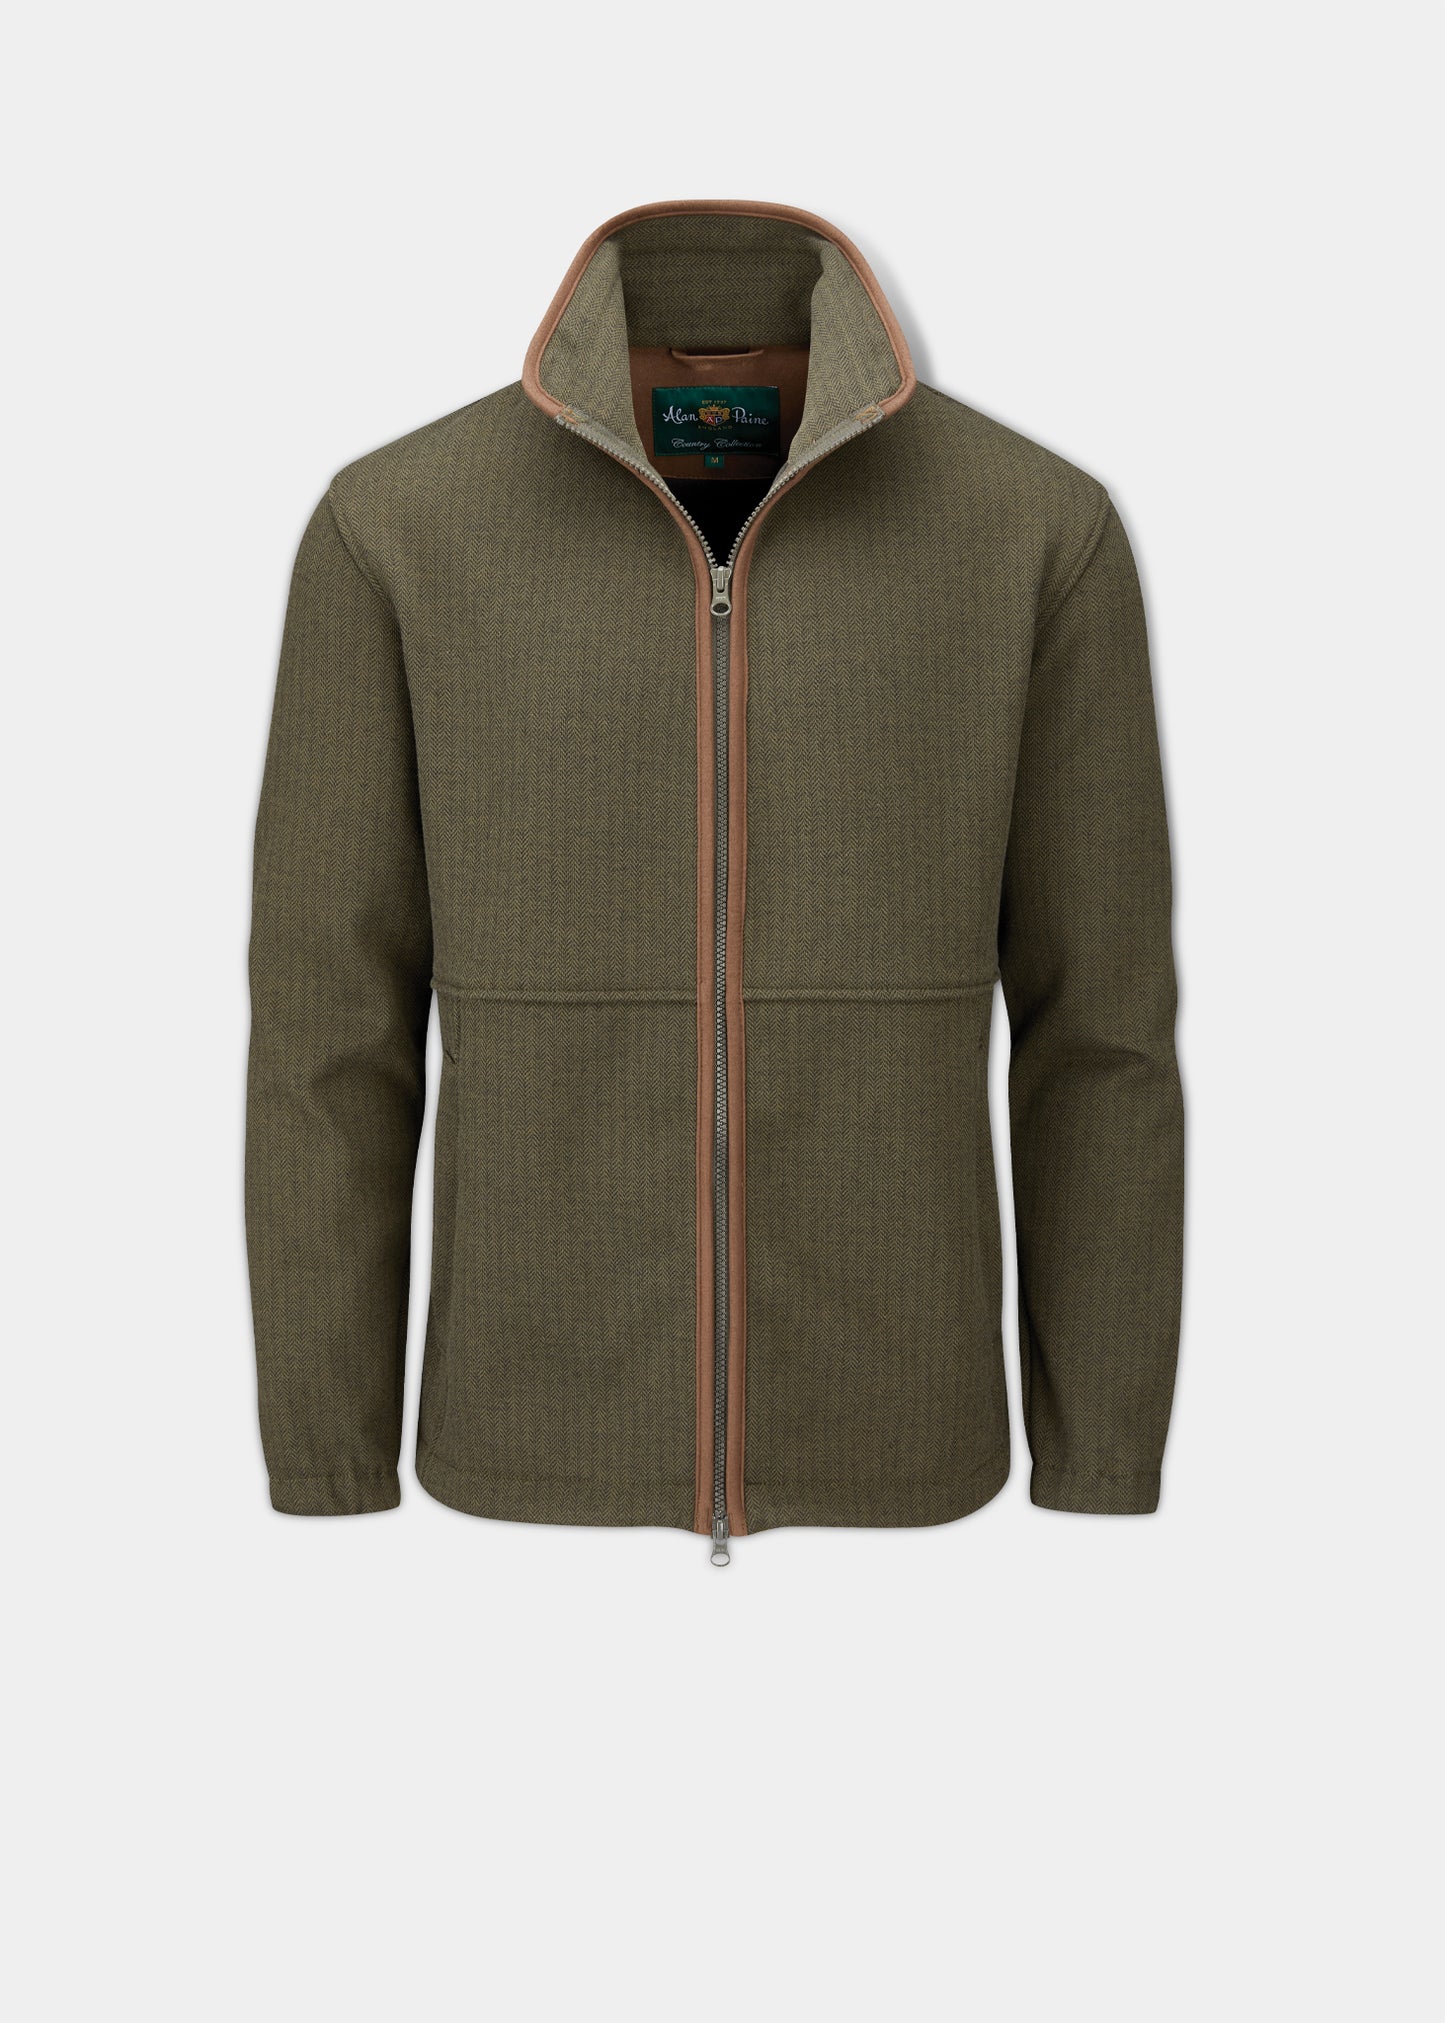 Aylsham Men's Fleece Jacket In Green Herringbone - Regular Fit